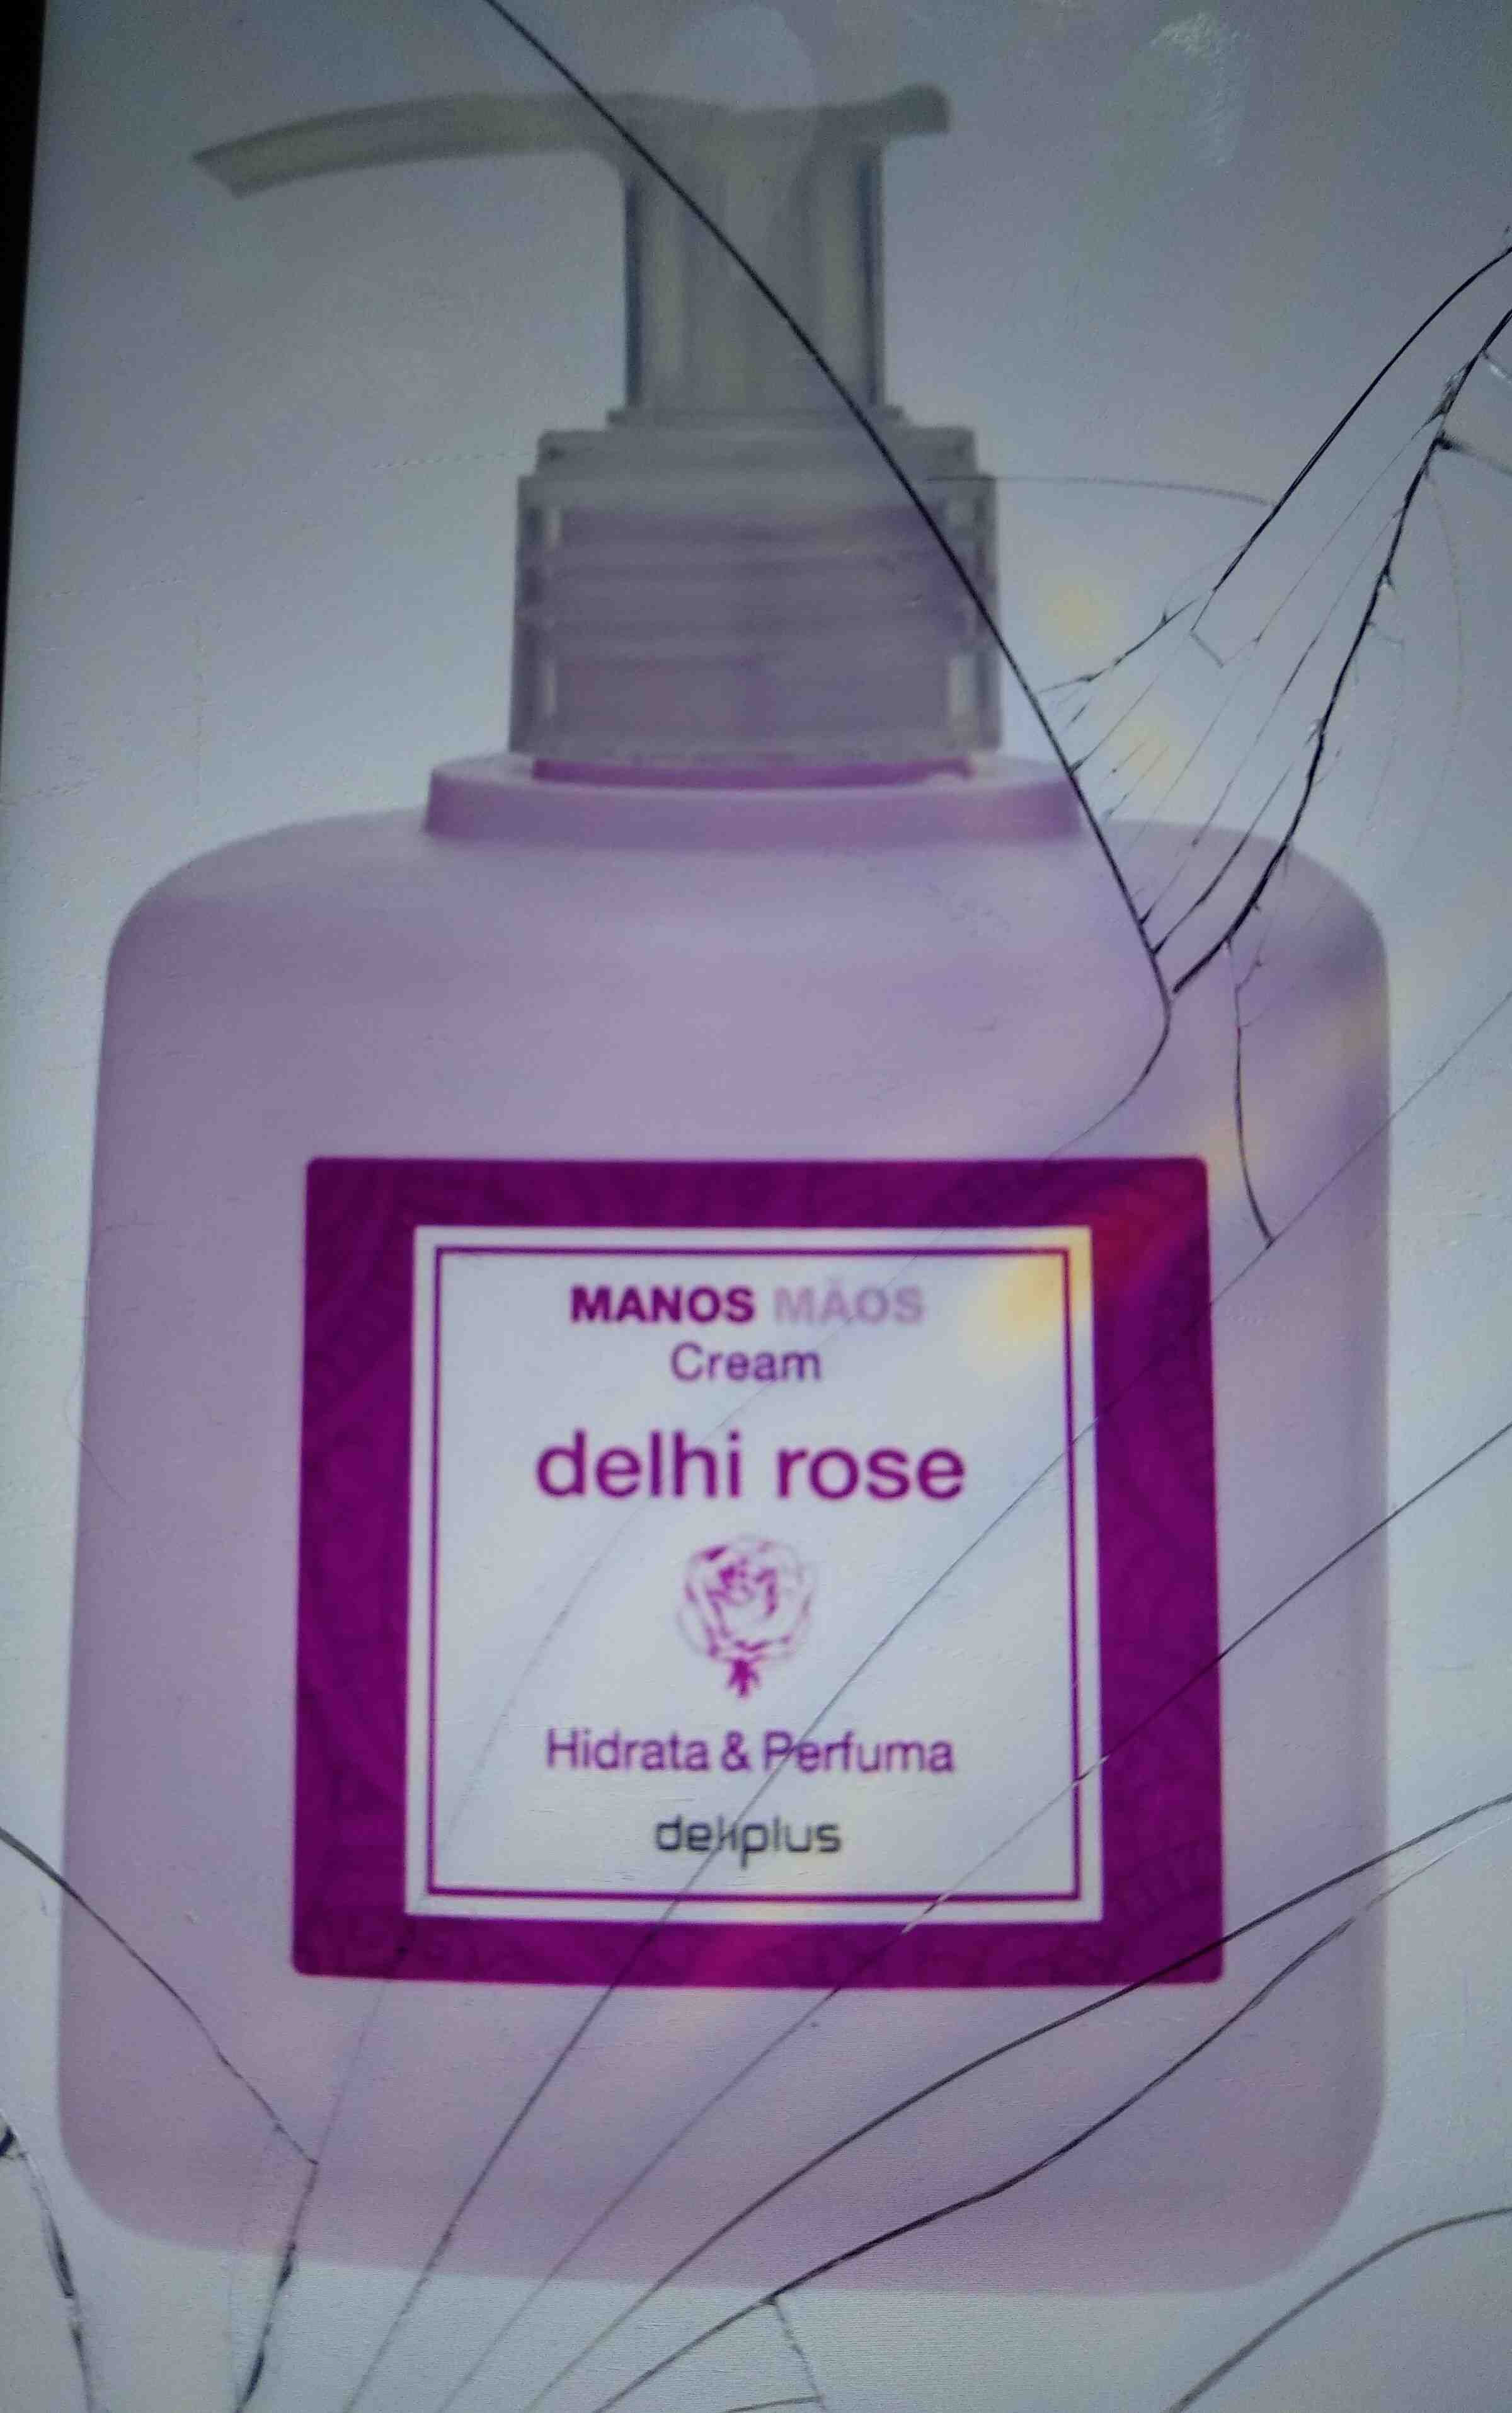 cream Delhi rose - Product - en